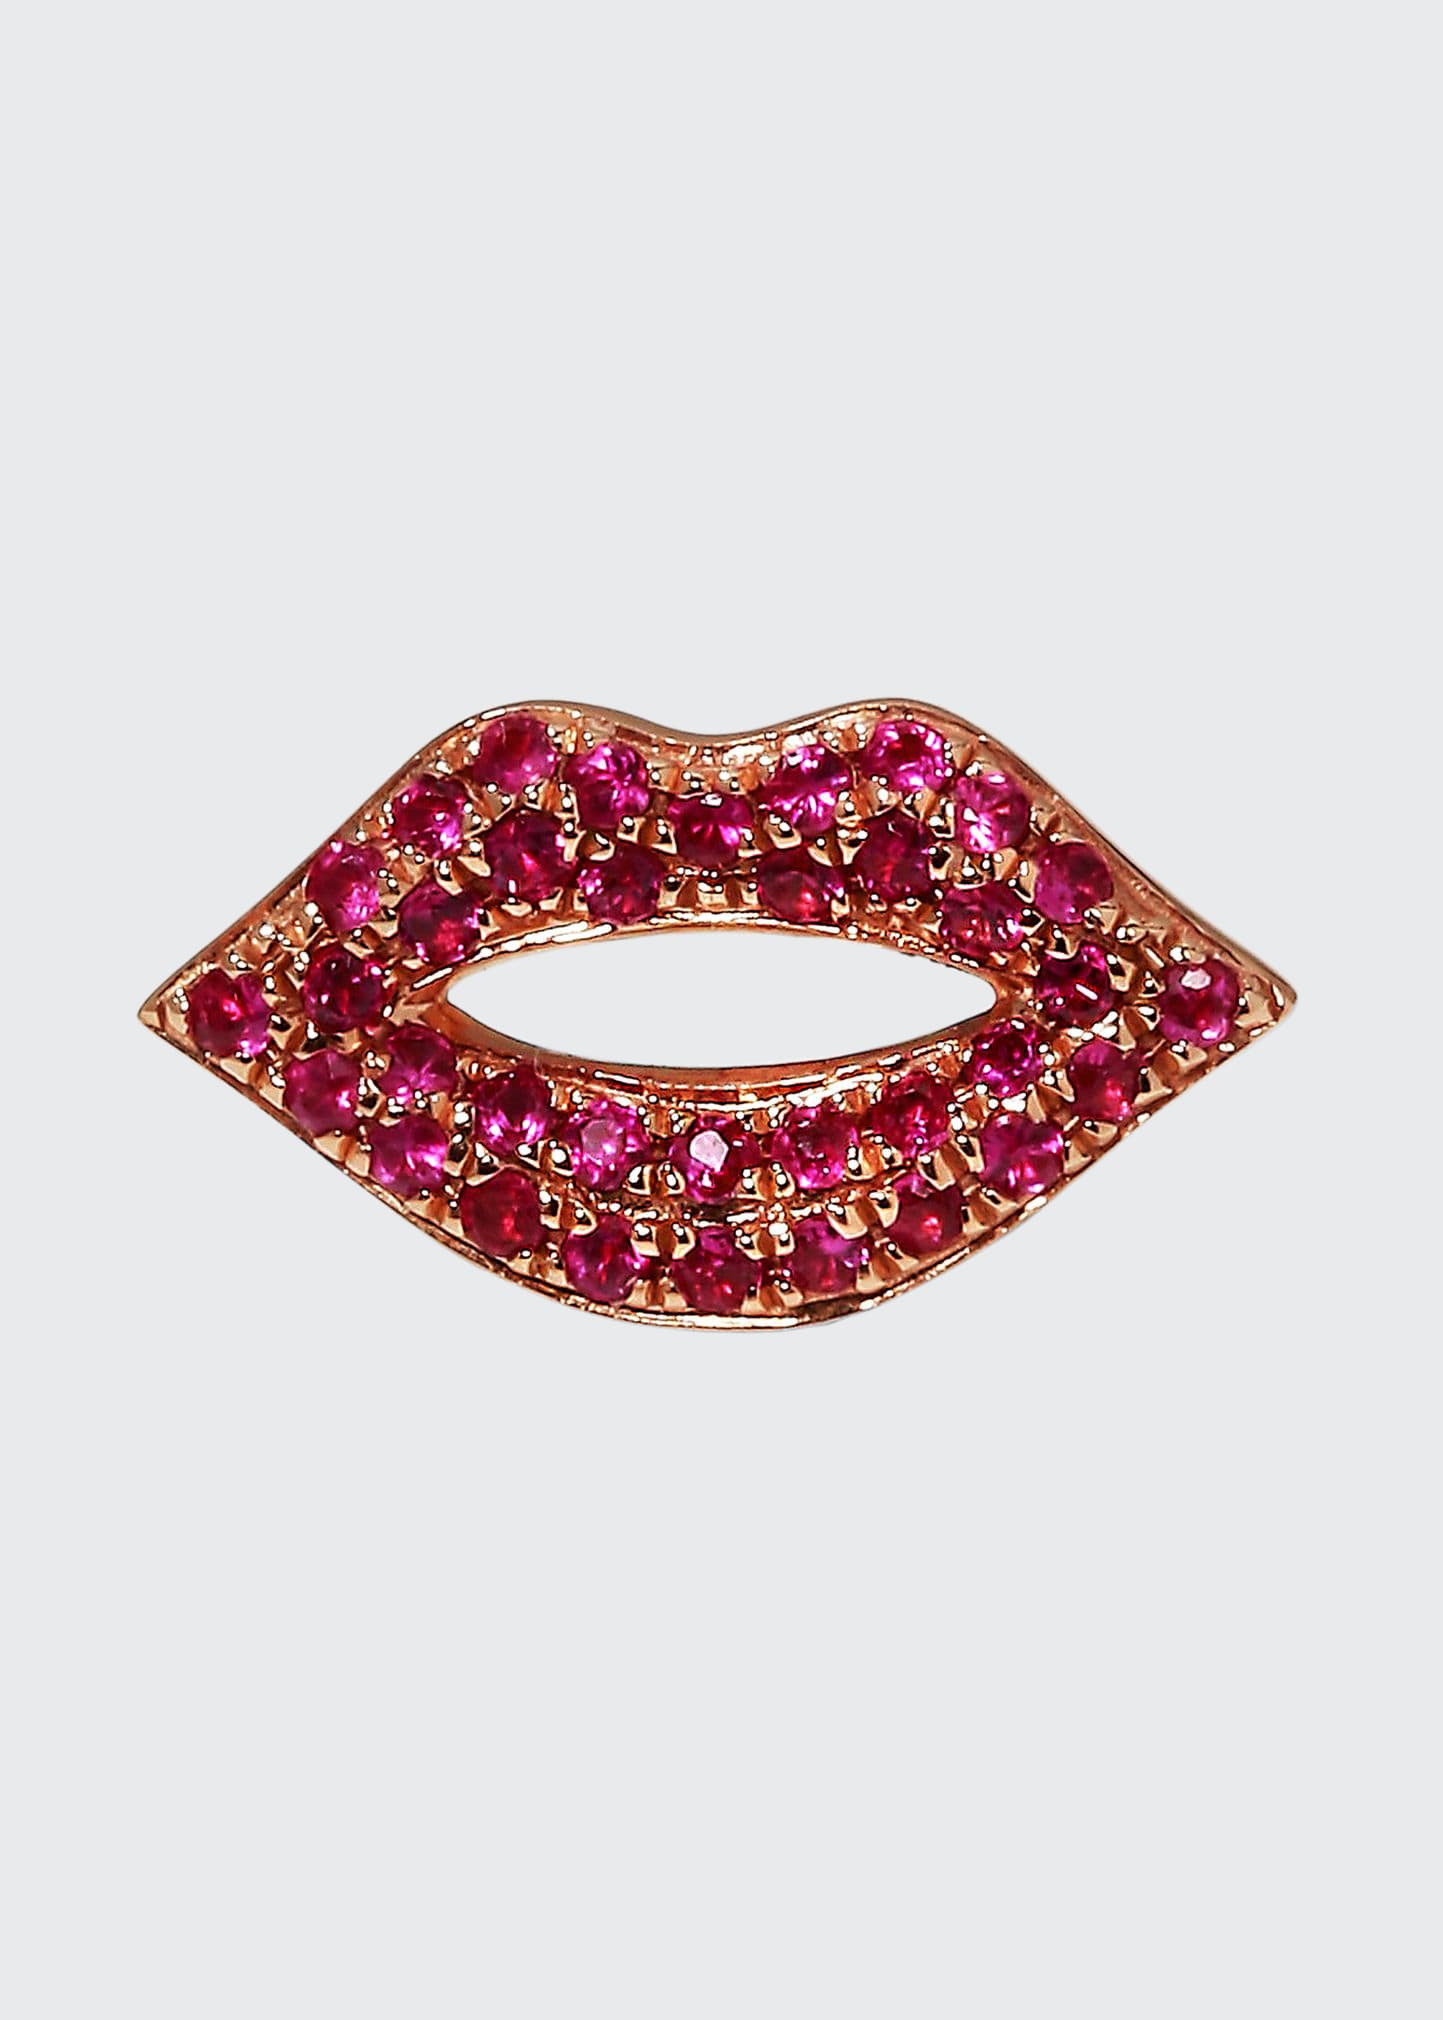 Sydney Evan 14k Rose Gold & Ruby Lips Single Stud Earring